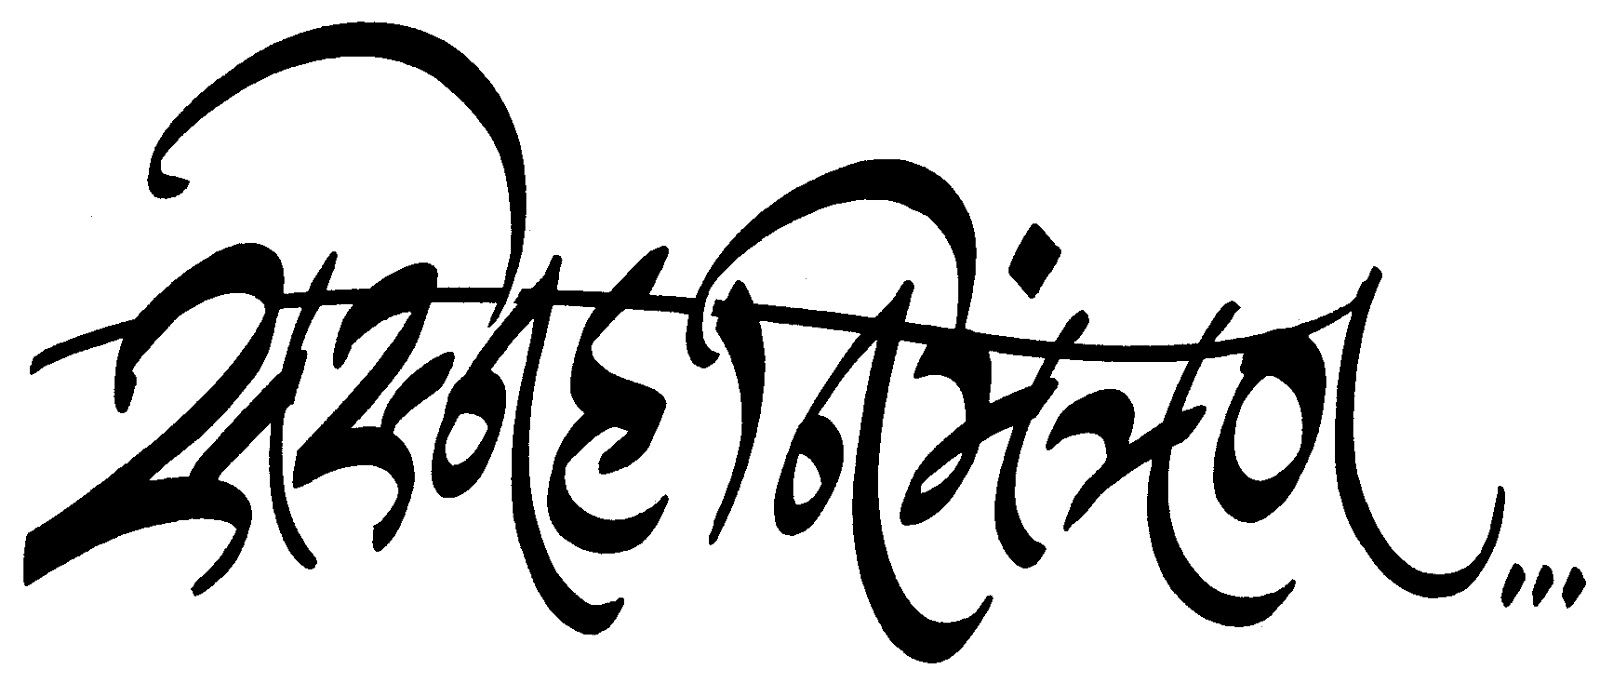 handwriting clipart marathi